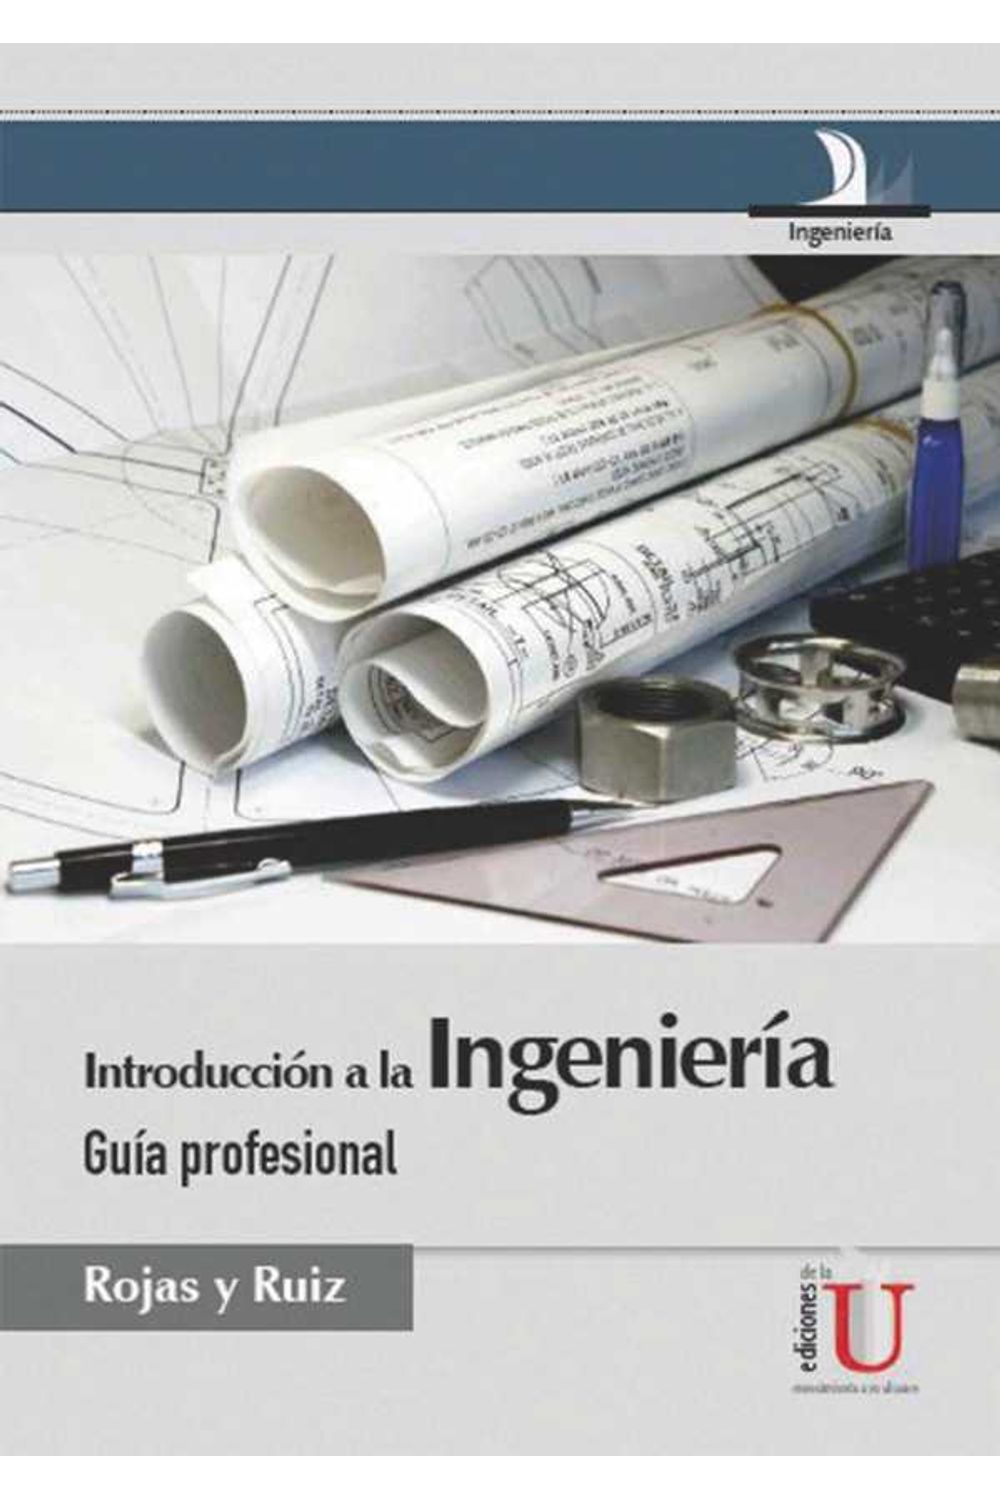 bw-introduccioacuten-a-la-ingenieriacutea-guiacutea-profesional-ediciones-de-la-u-9789587623024